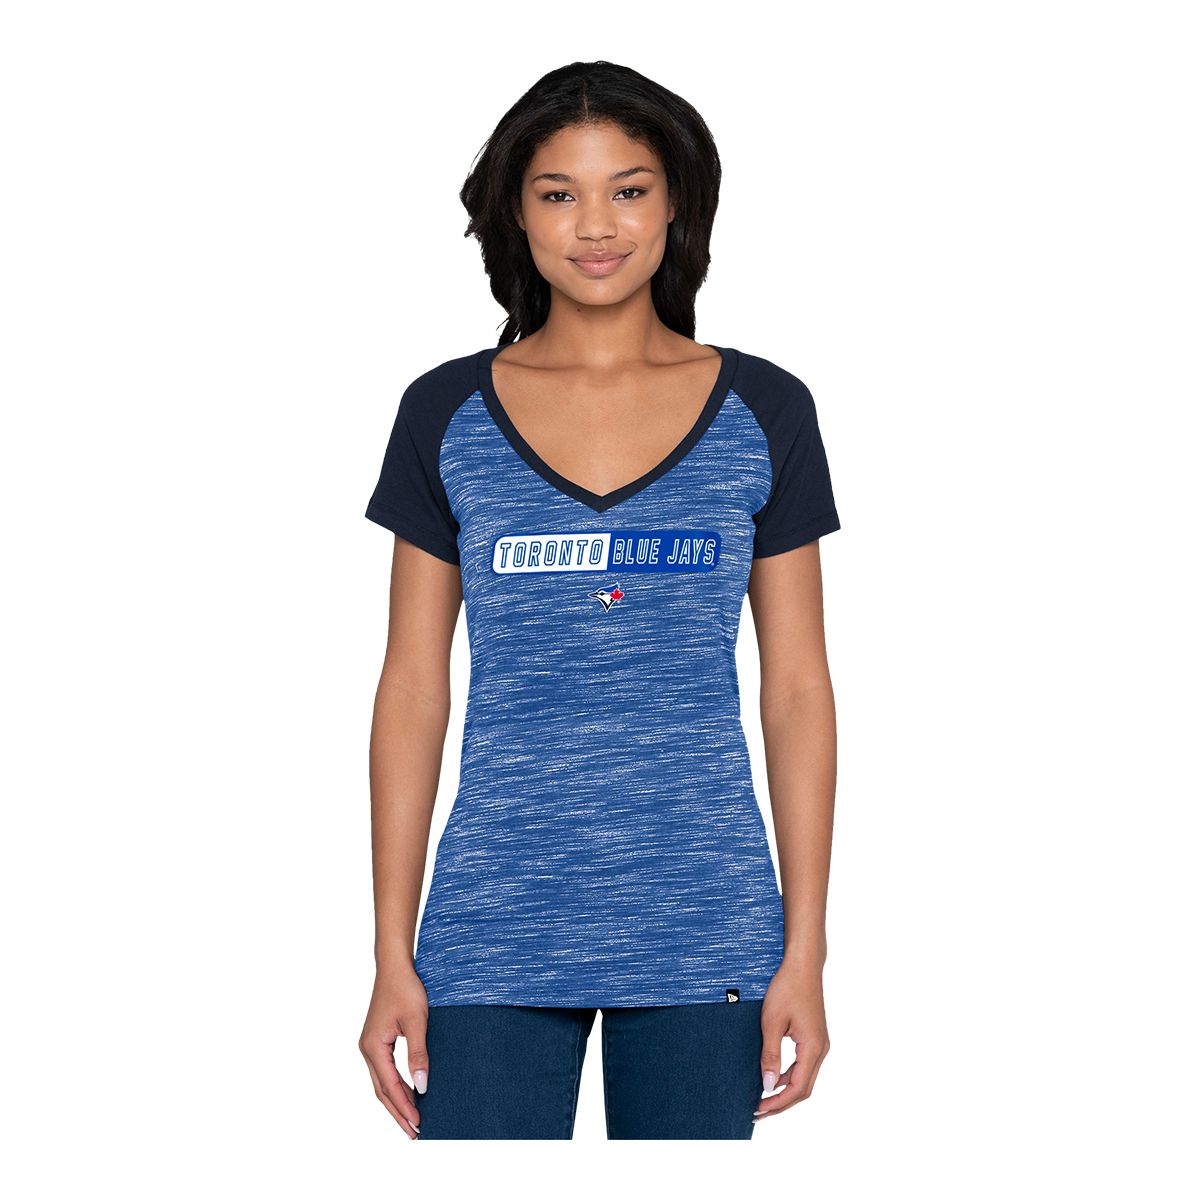  New Era Women's Short Sleeve Space Dye Crew Neck Tee Shirt -  MLB Ladies Style T-Shirt : Sports & Outdoors